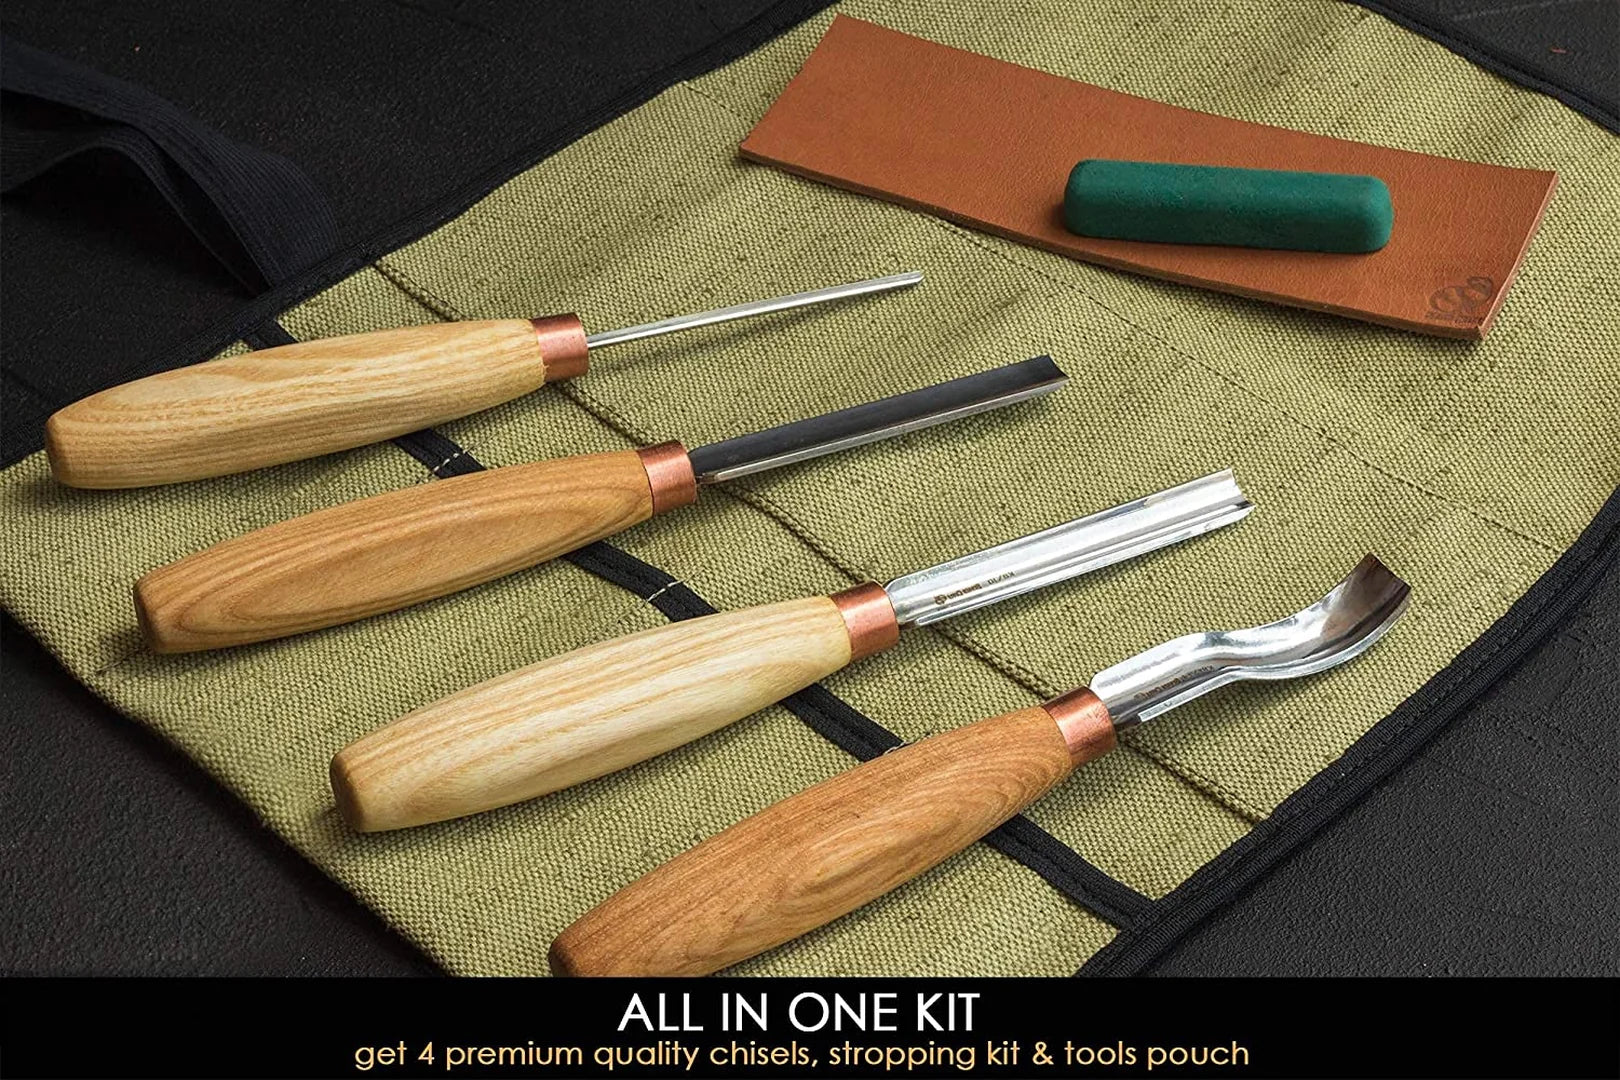 Best Hand Sharpened Beginner Wood Carving Tools - Set of 7